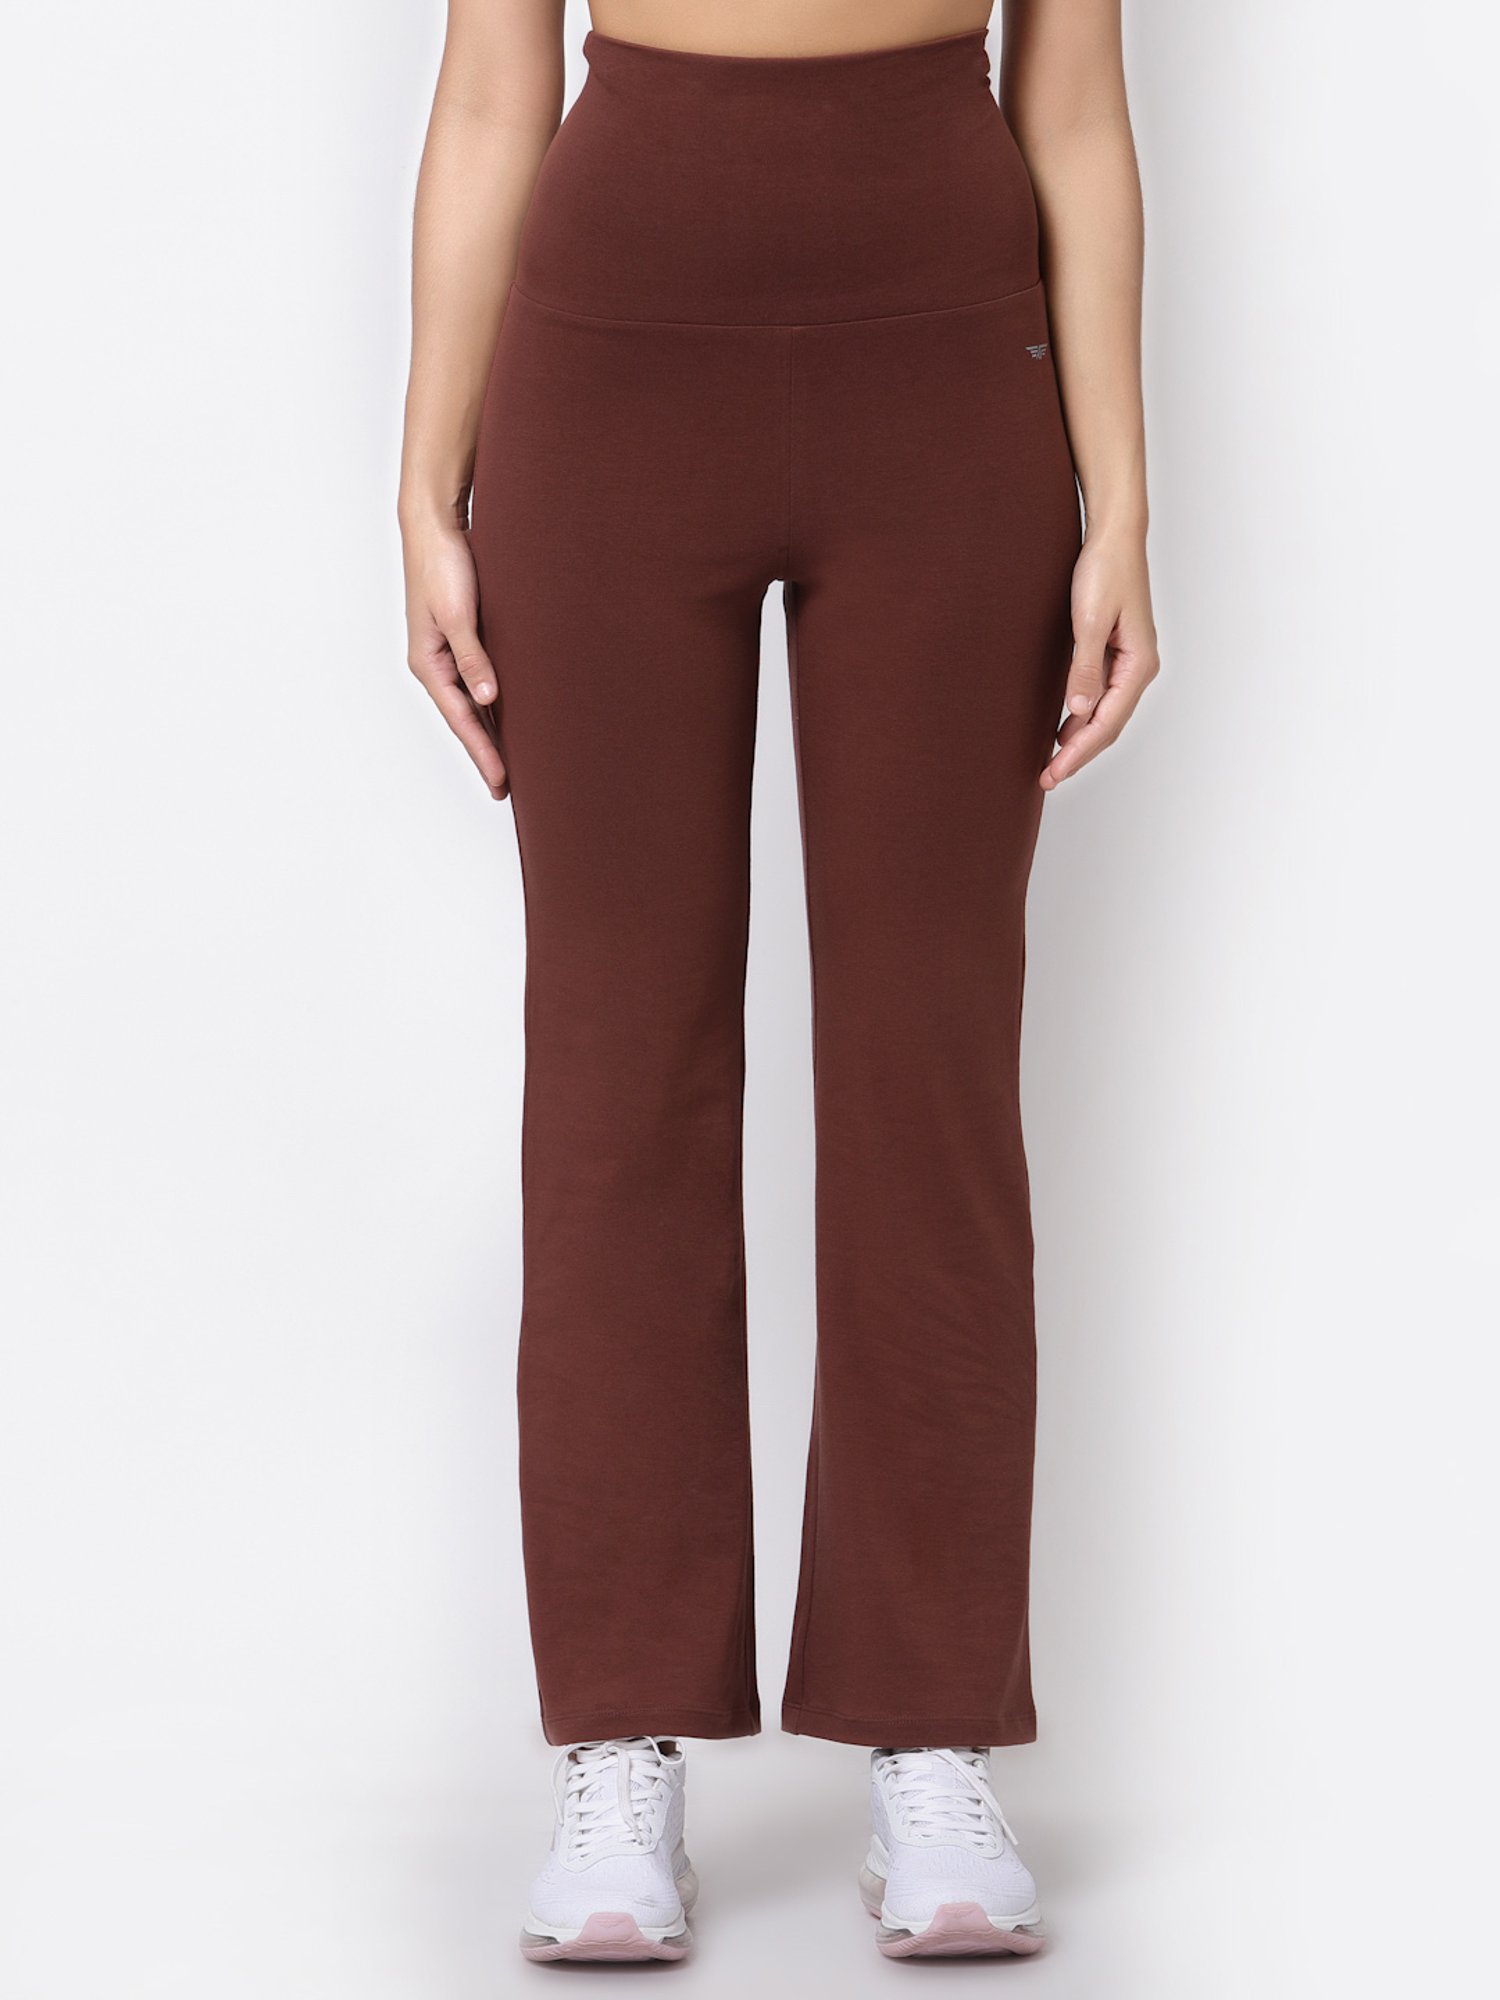 Buy SweatyRocks Womens Elastic High Waist Flared Bell Bottom Ribbed Knit Yoga  Pants Coffee Brown Small at Amazonin